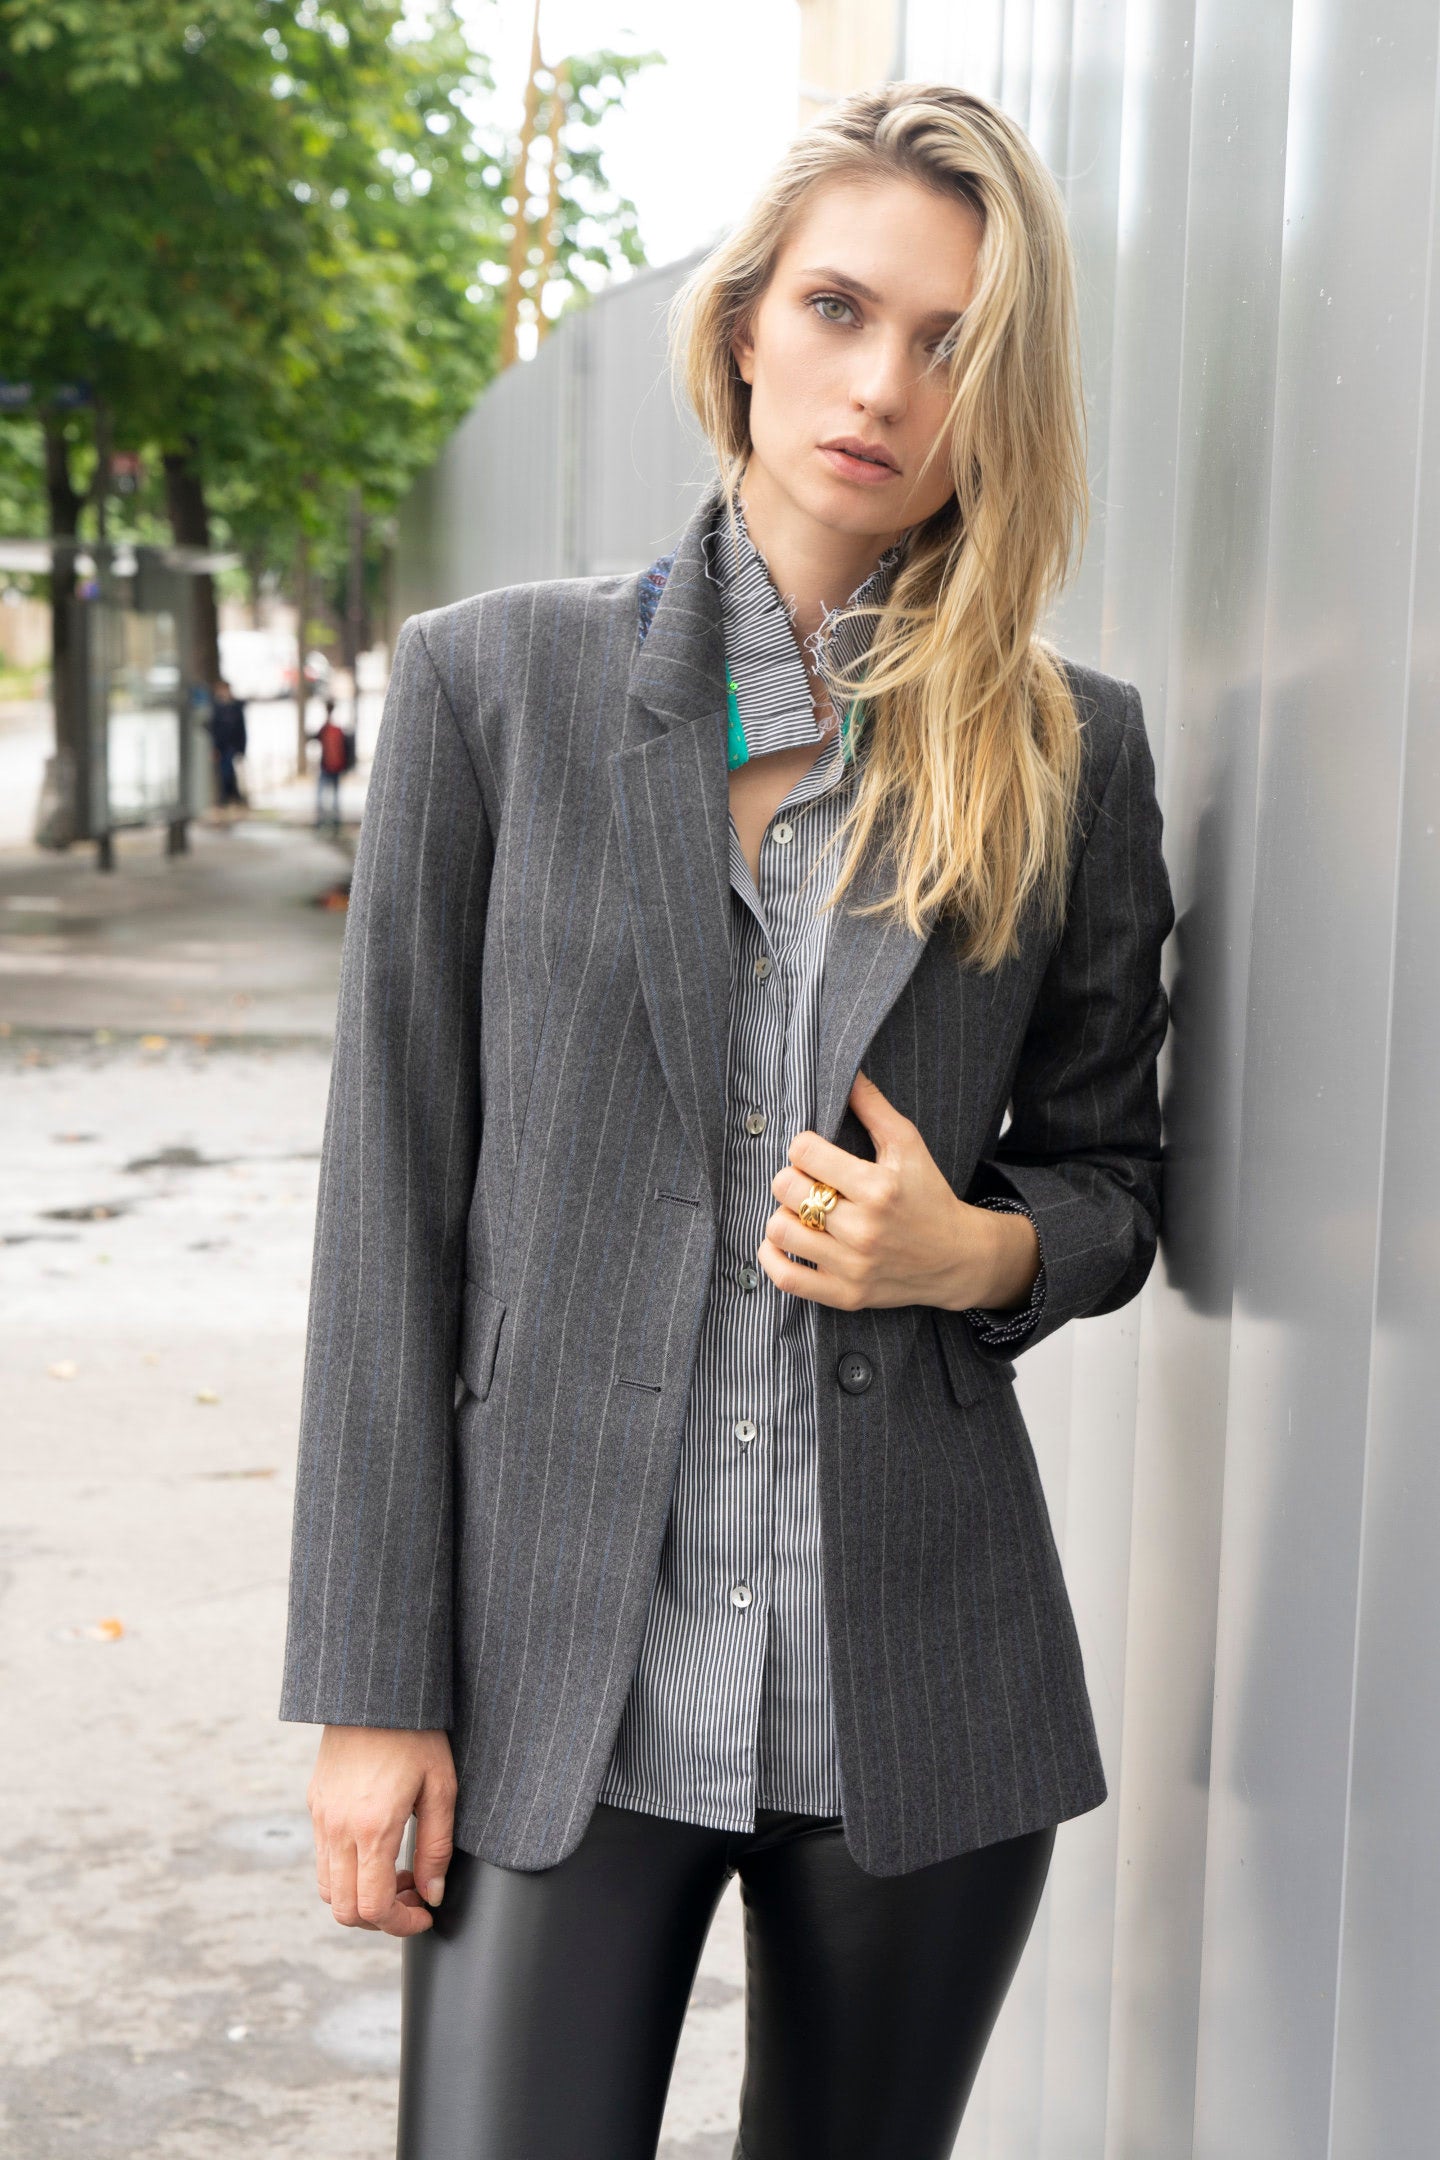 La Audrey - Oversized blazer jacket Wool with white chalk stripes Blue &amp; gold paisley print lining